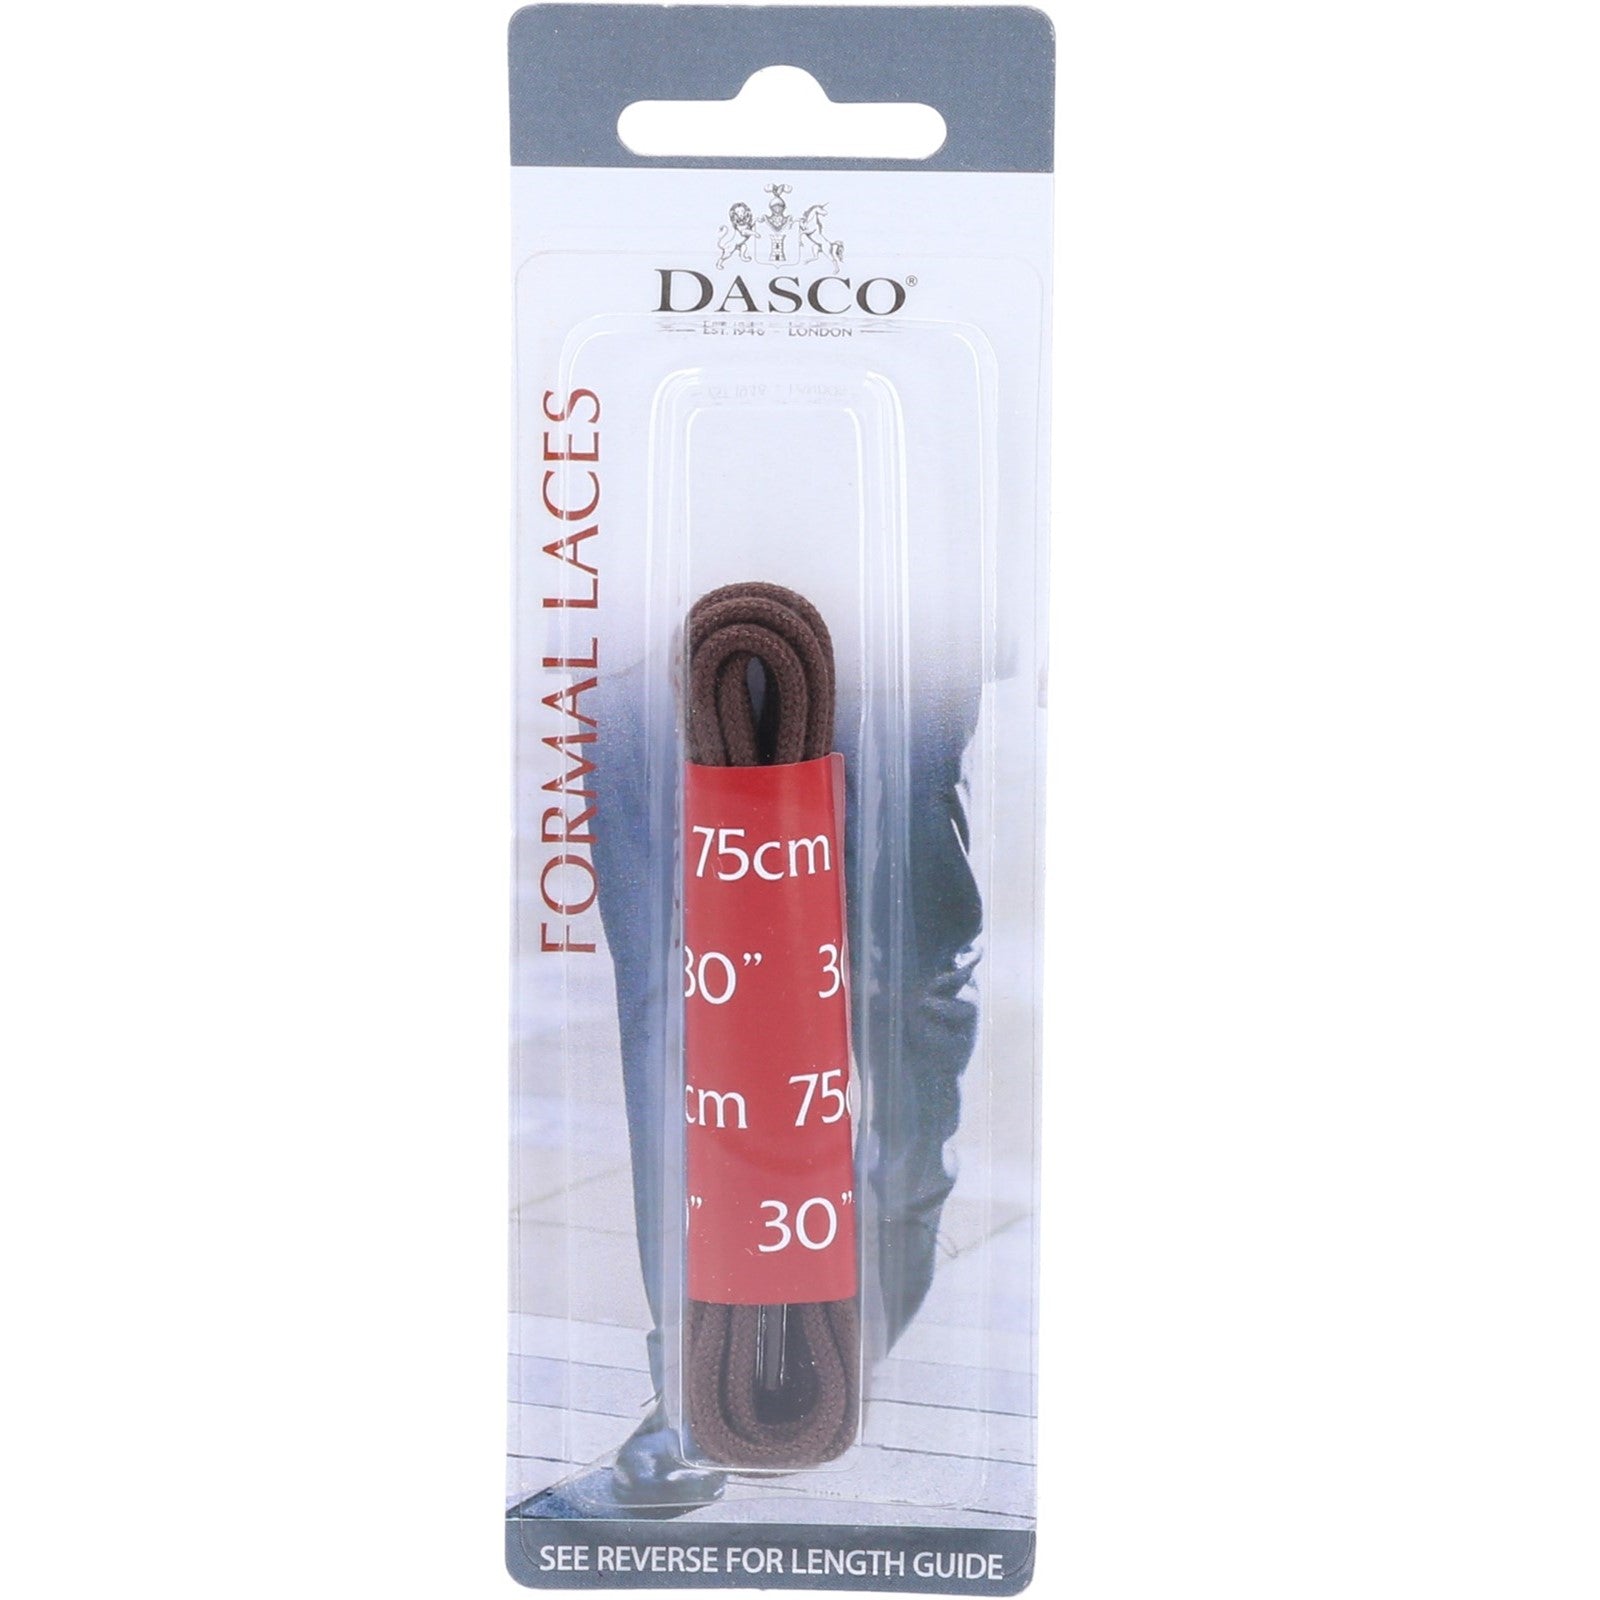 Dasco 75cm Round Shoe Lace 6 Pack